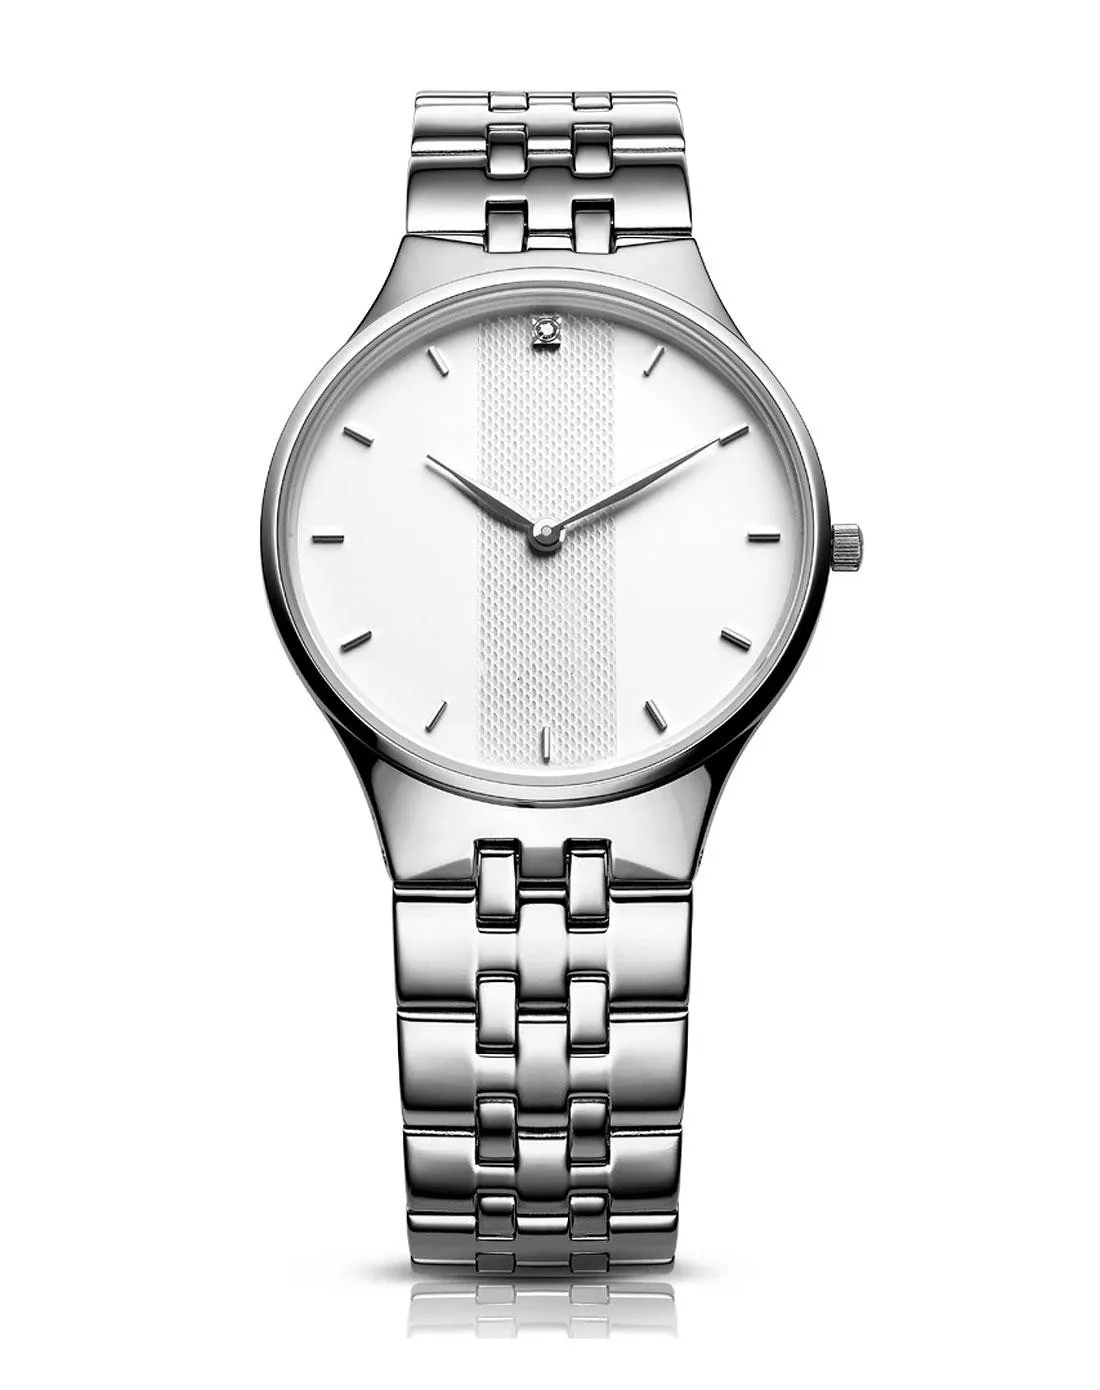 

OMJ019 Luxury Brand New Watches Men Ceramic Bezel Stainless Steel 40mm Rubber strap Quartz watch AAA+ Watch 9891